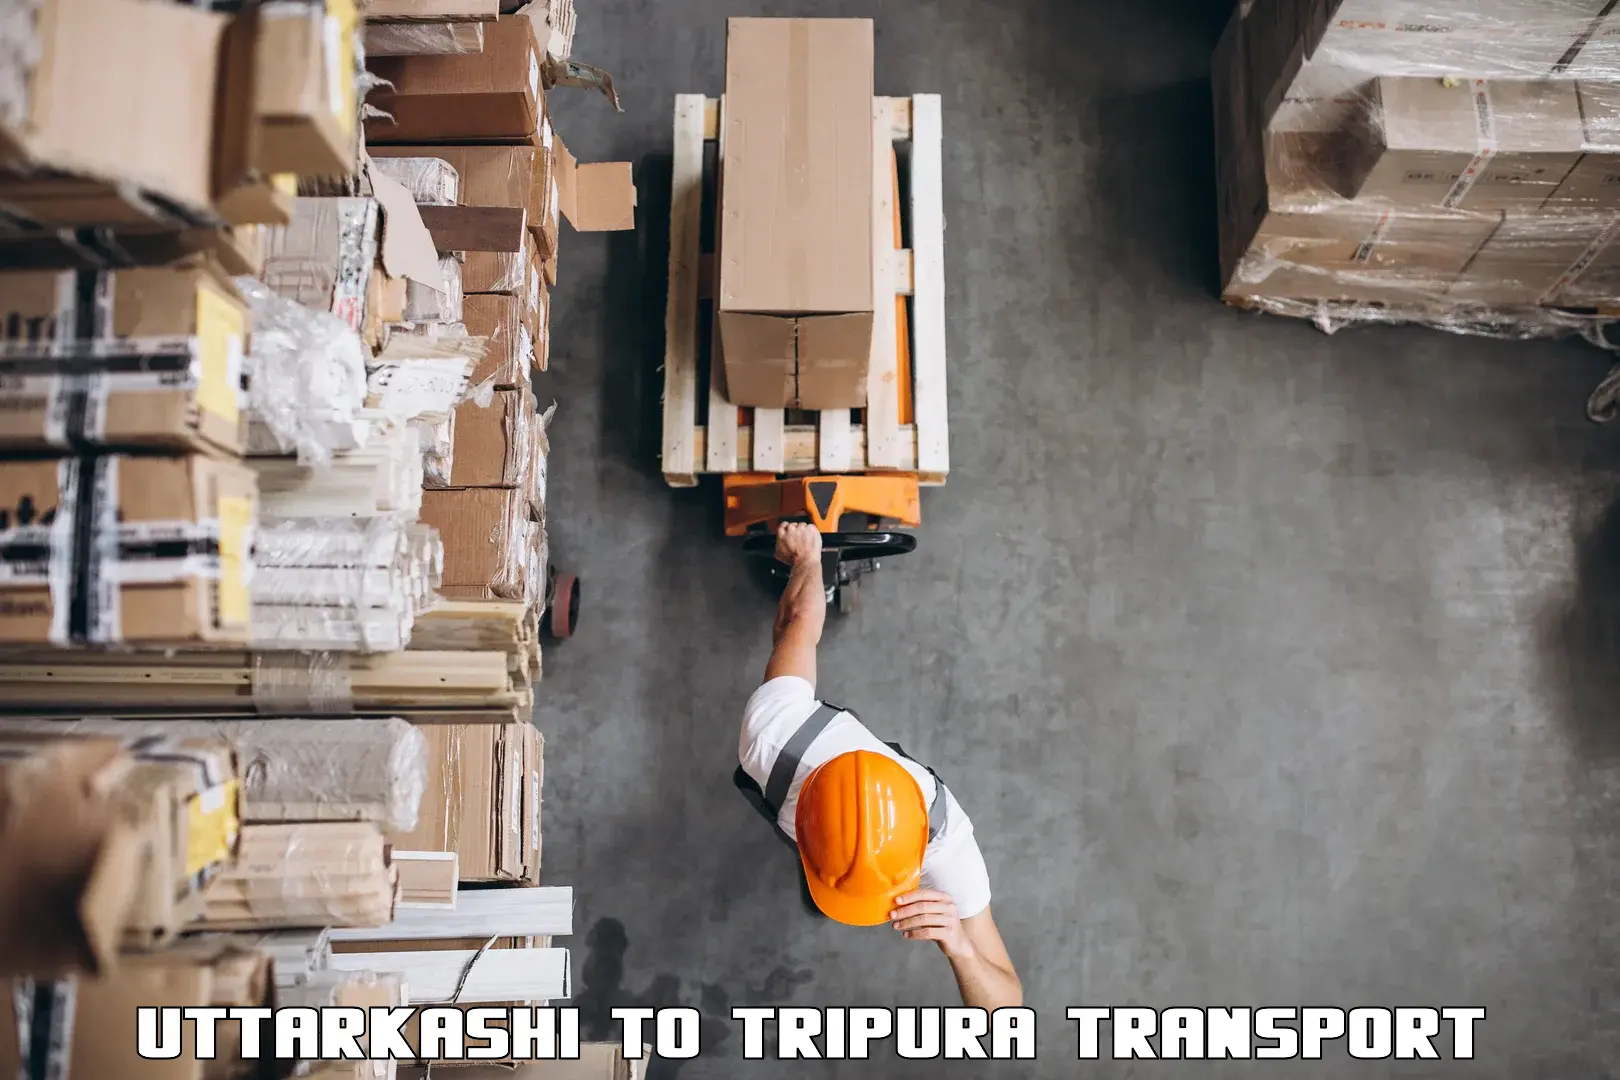 Transport shared services Uttarkashi to Udaipur Tripura